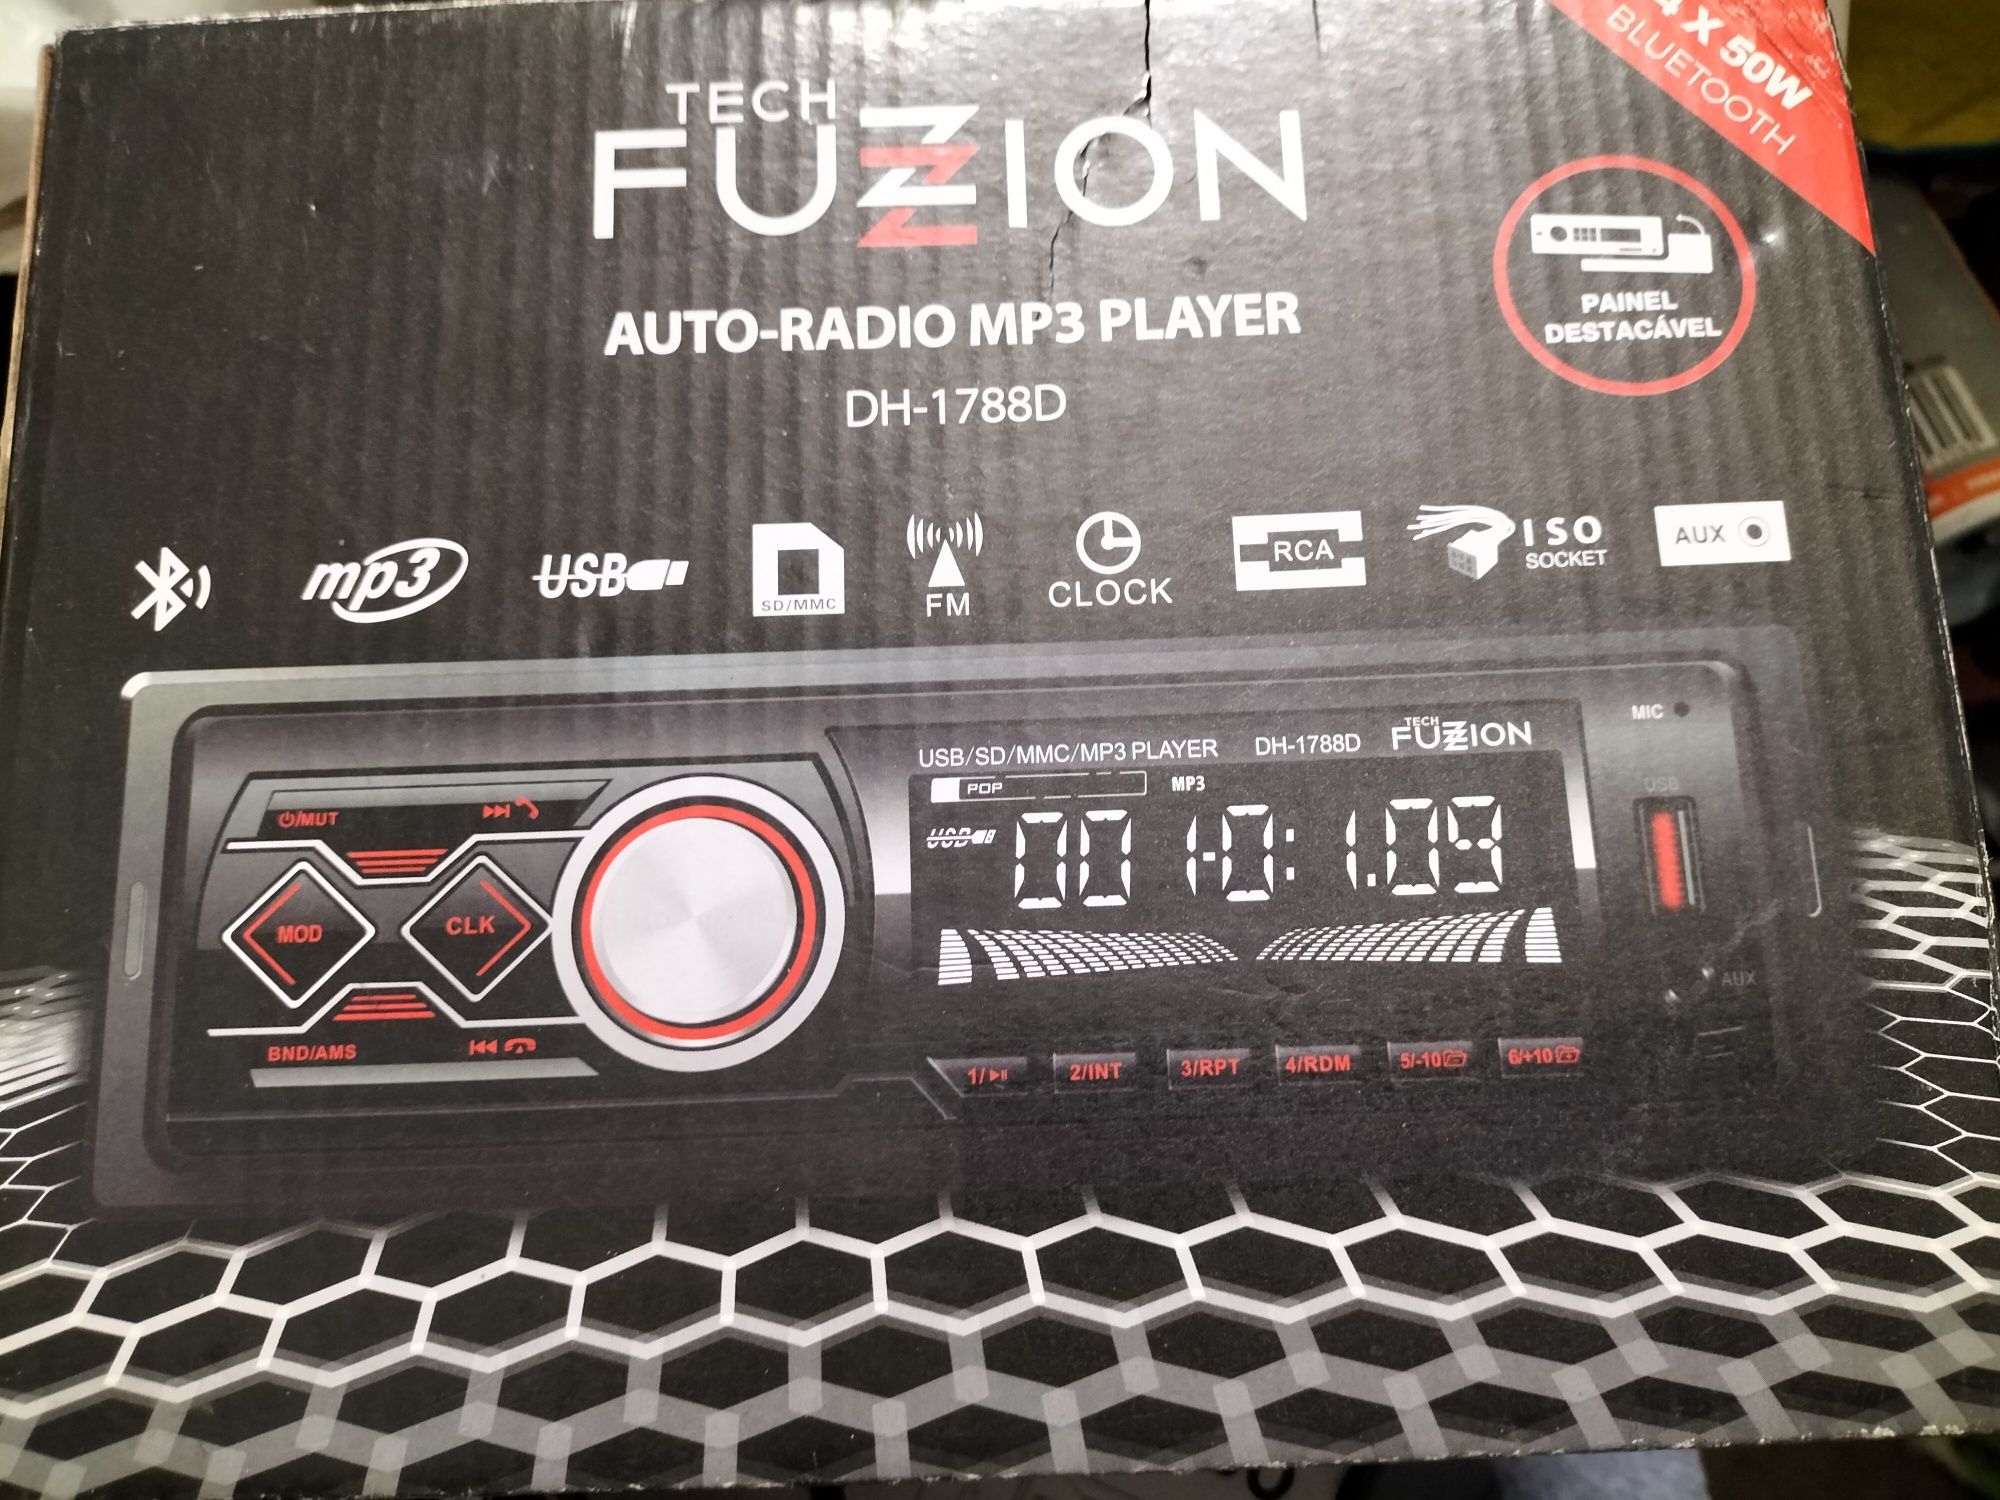 Auto rádio MP3 Player Tech Fuzion